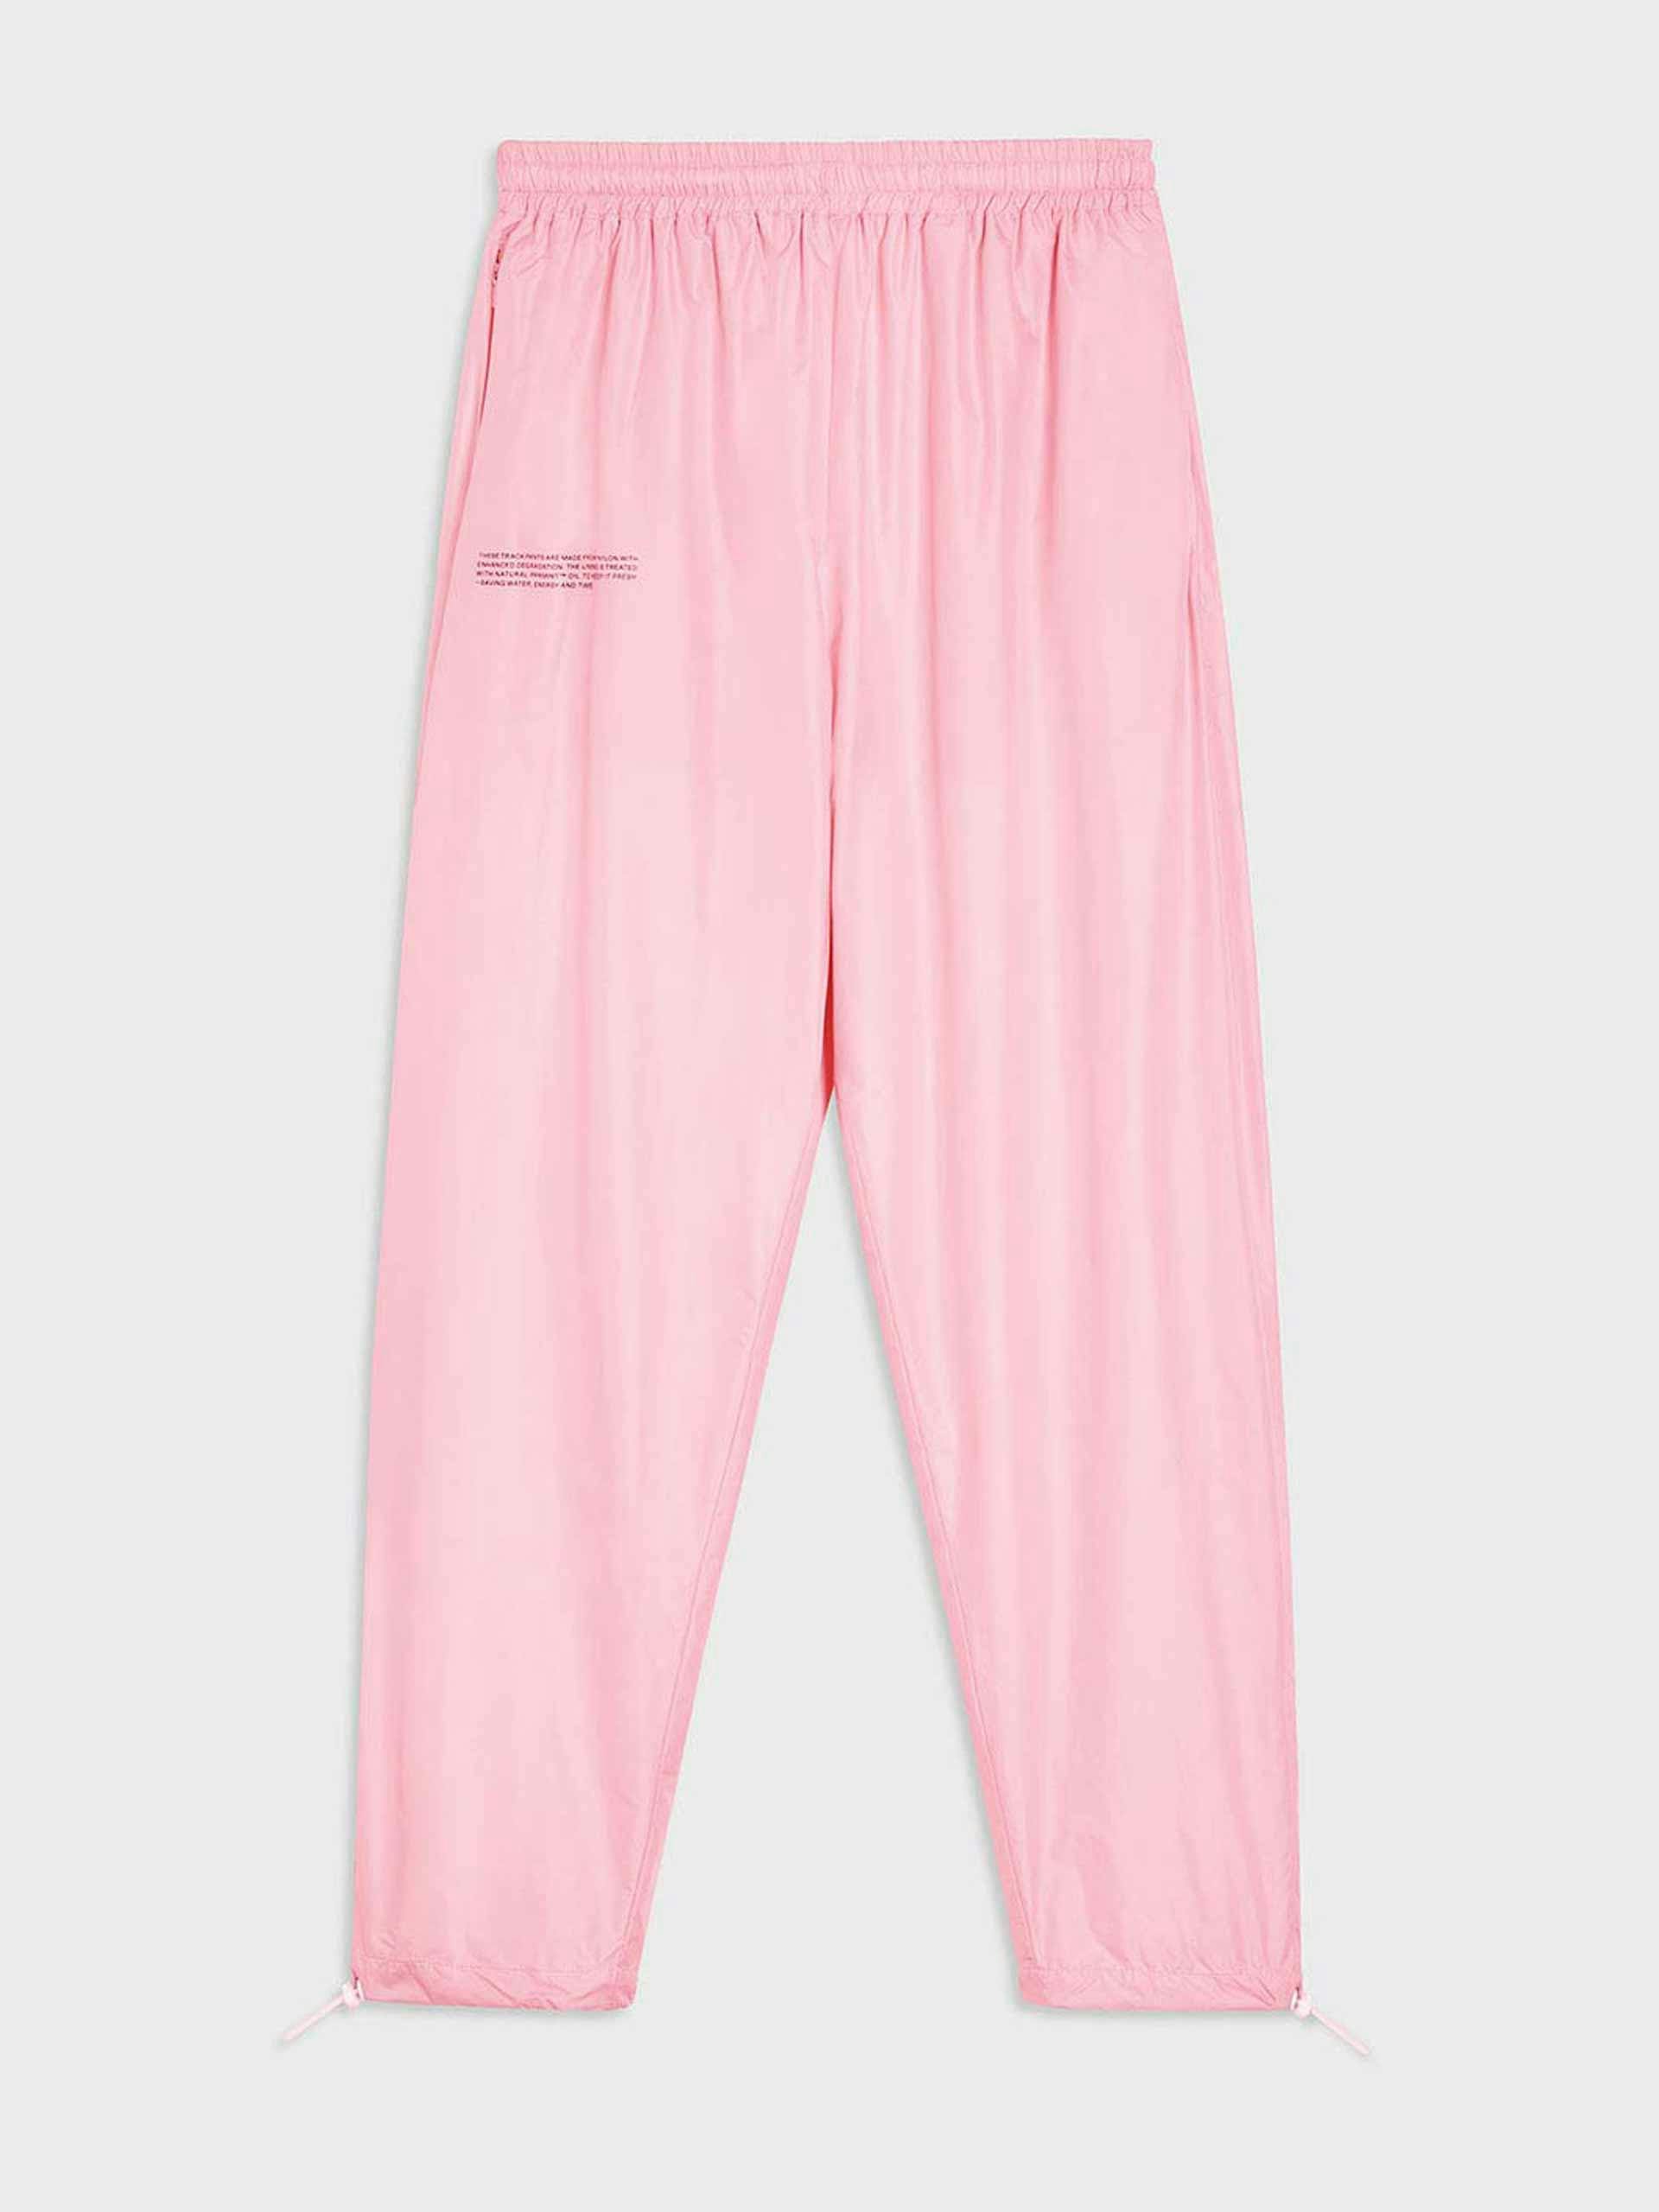 Pink nylon track pants